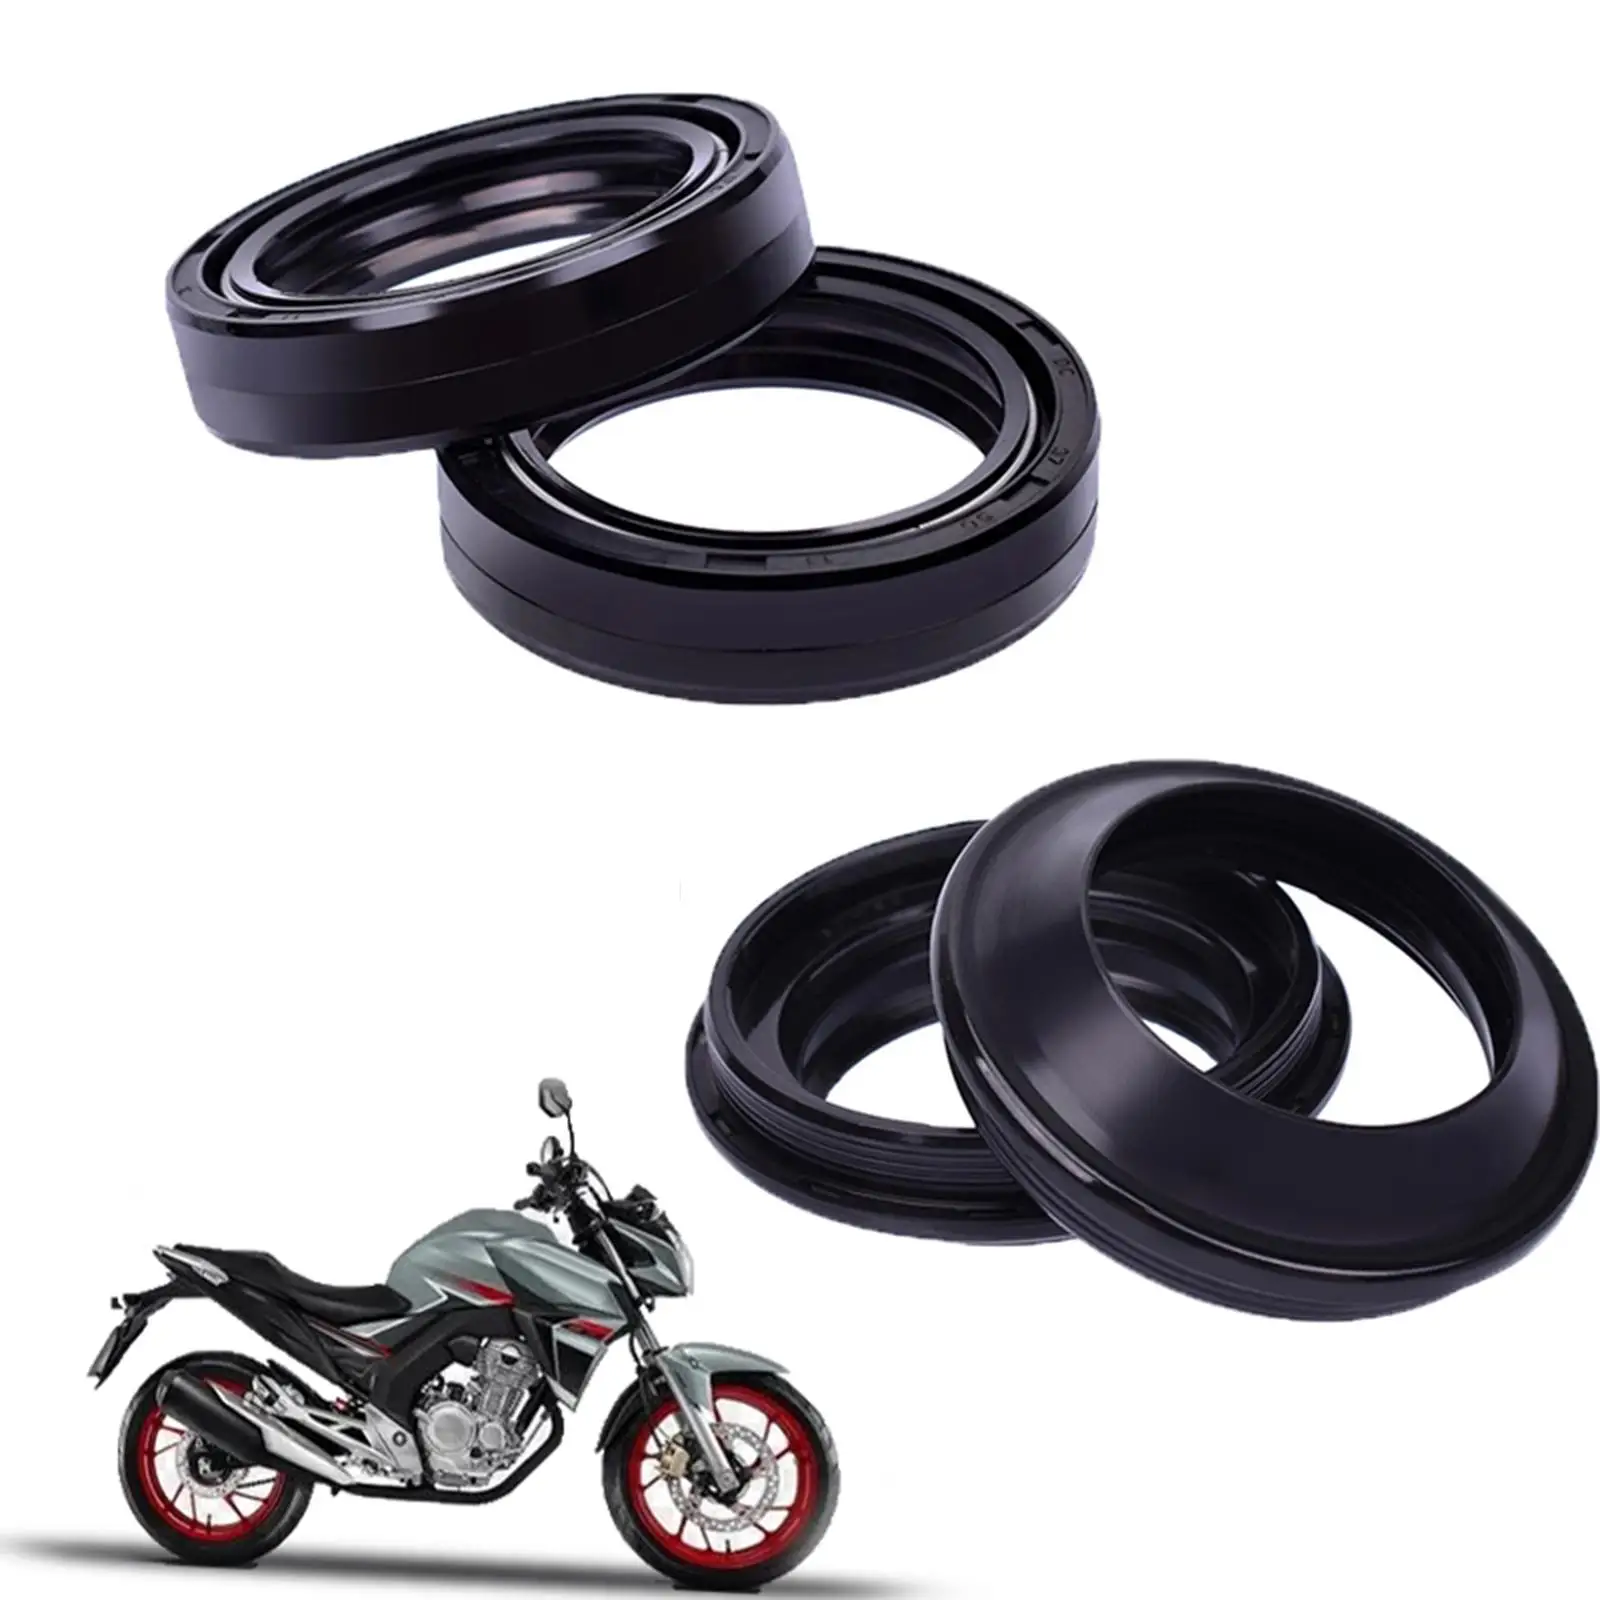 Motorcycle Oil Seals Dust Seals Kit for Honda CBR250RA Crf230M Crf230F